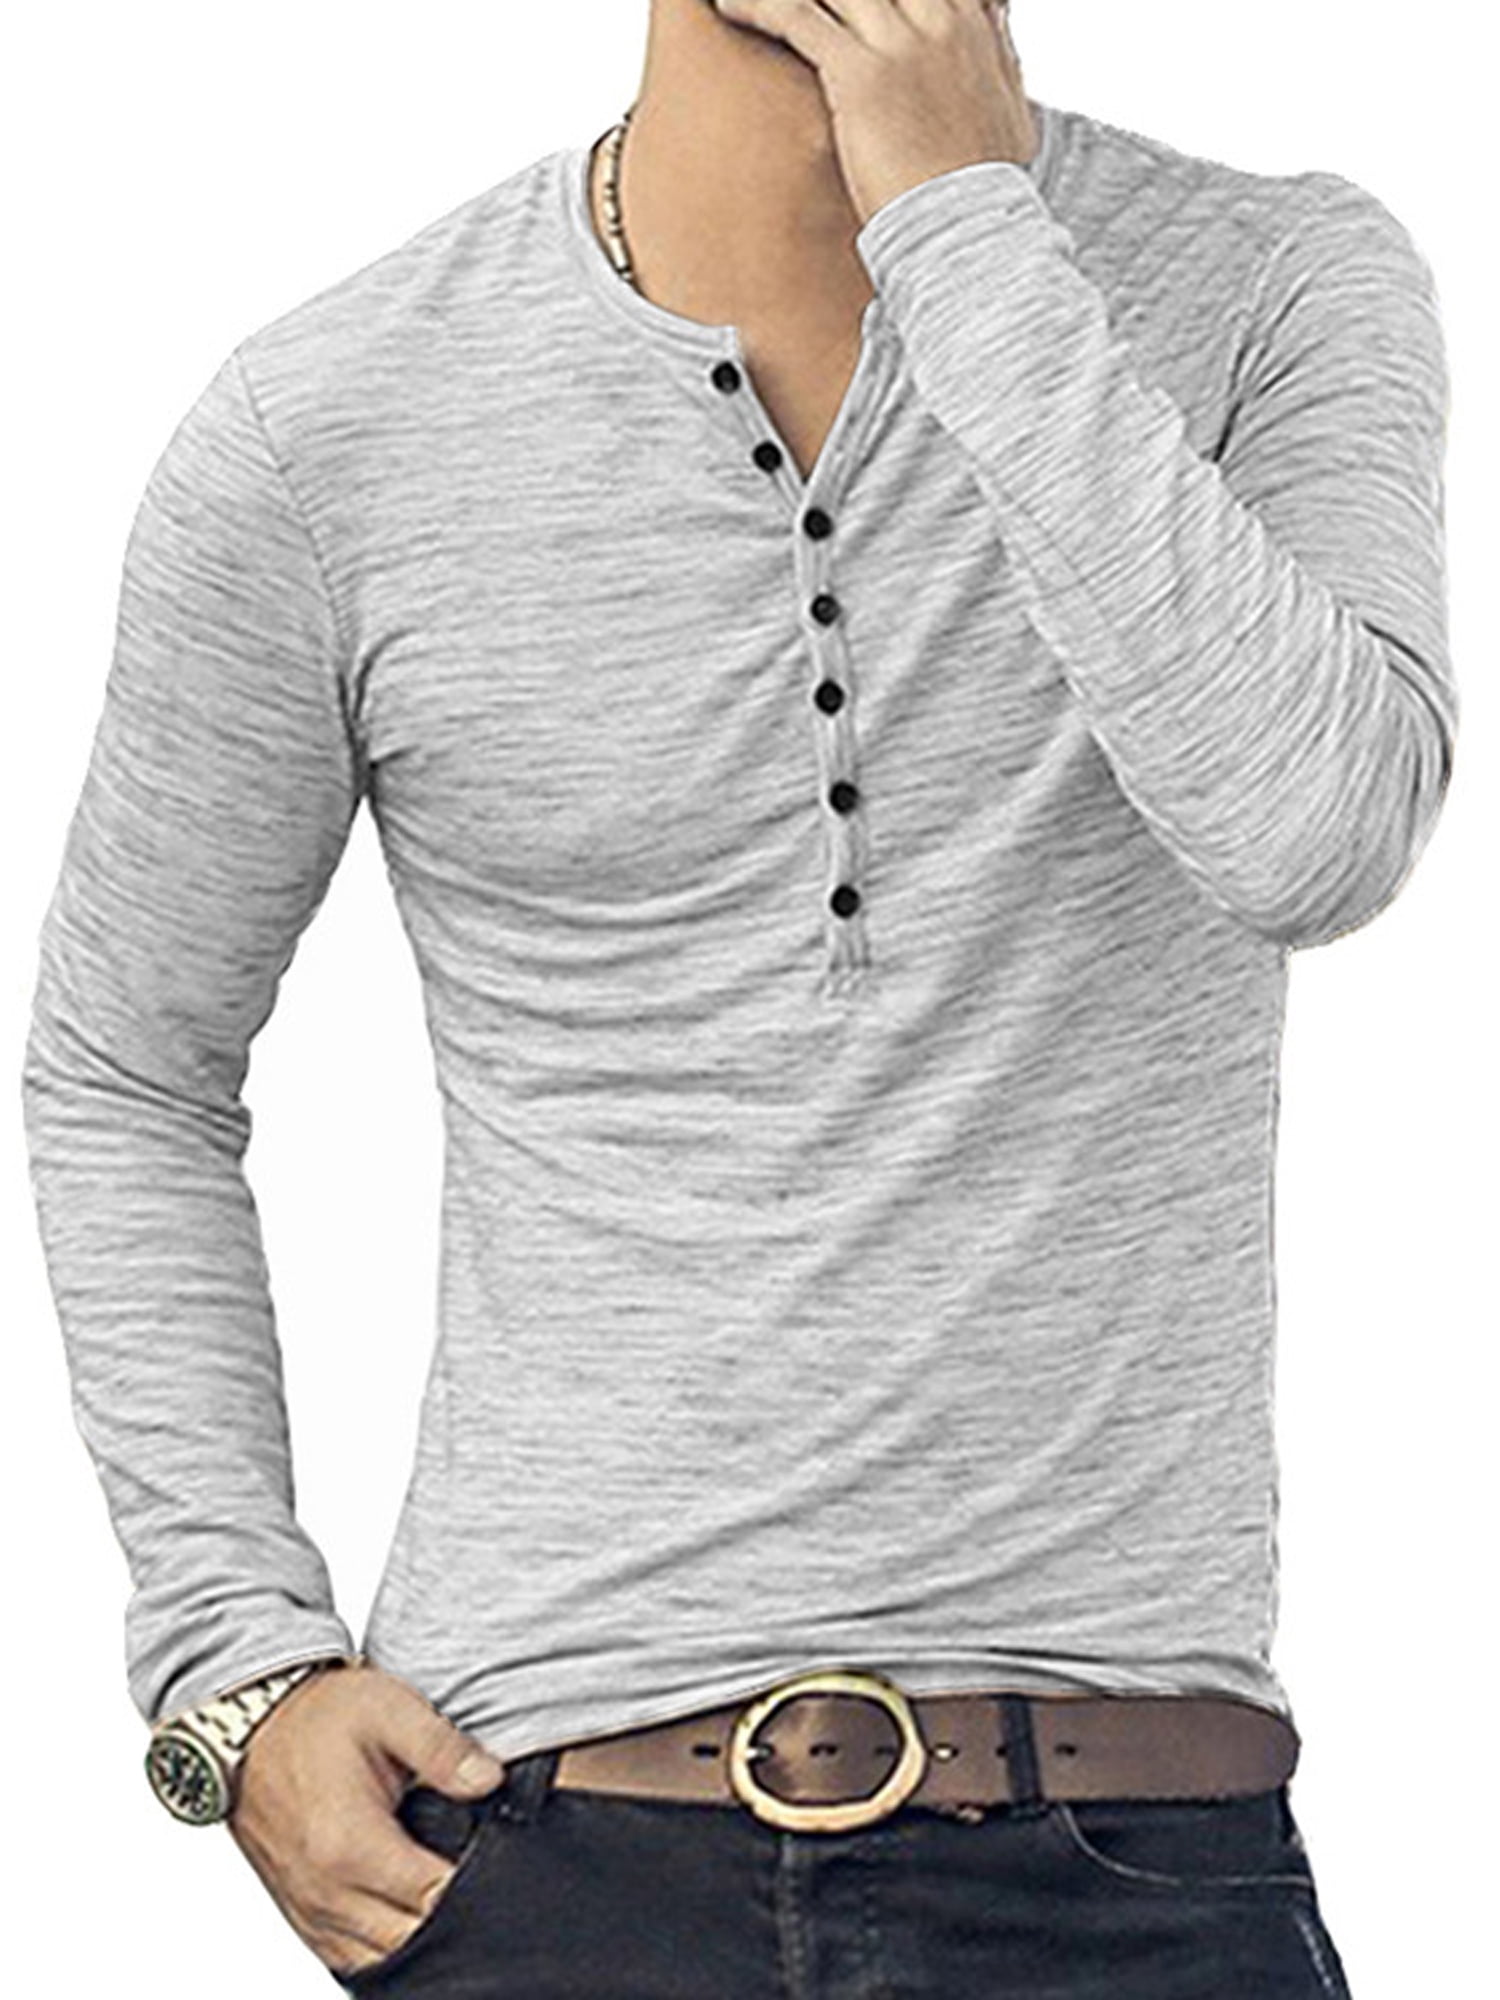 FEDULK Plus Size Mens Henley Shirt Long Sleeve Stand Collar Button Down Relaxed Fit Autumn Casual Tee T-Shirt 